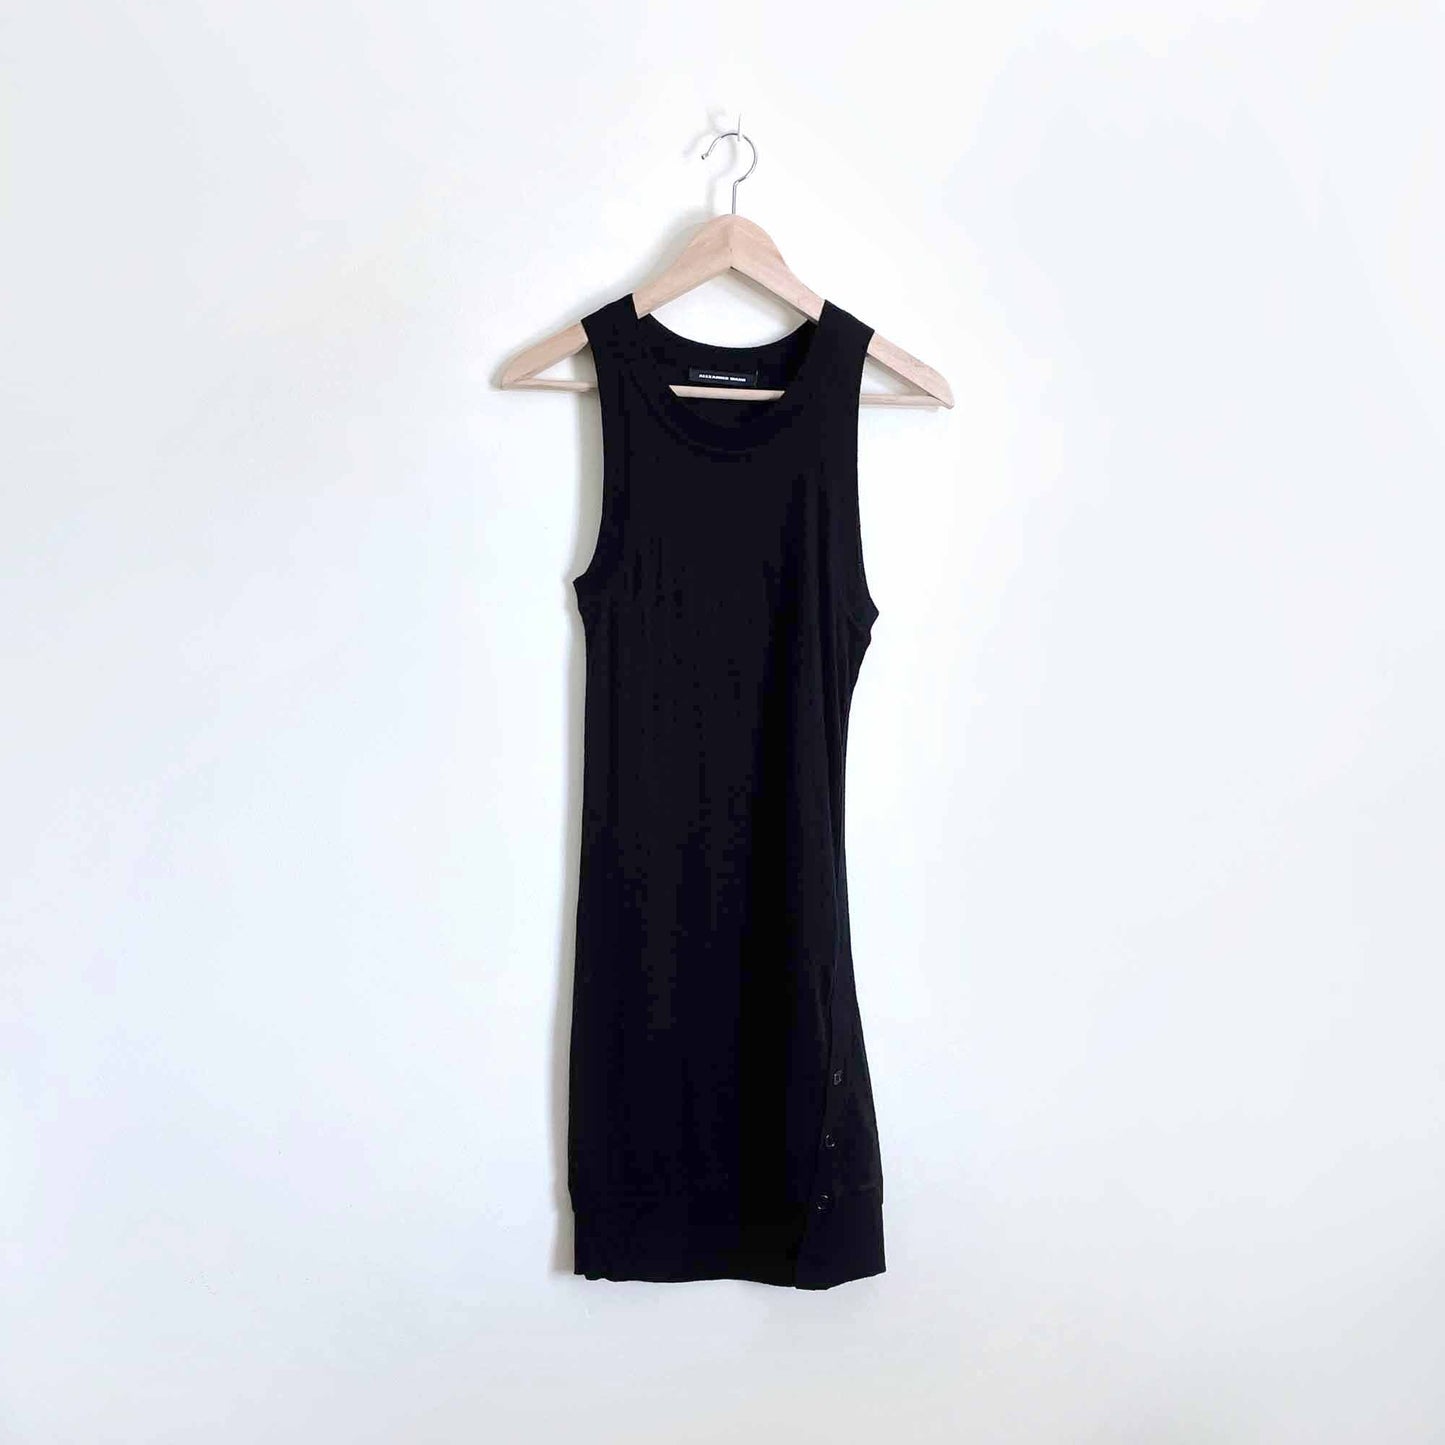 Alexander Wang wool-blend knit tank dress - size Small